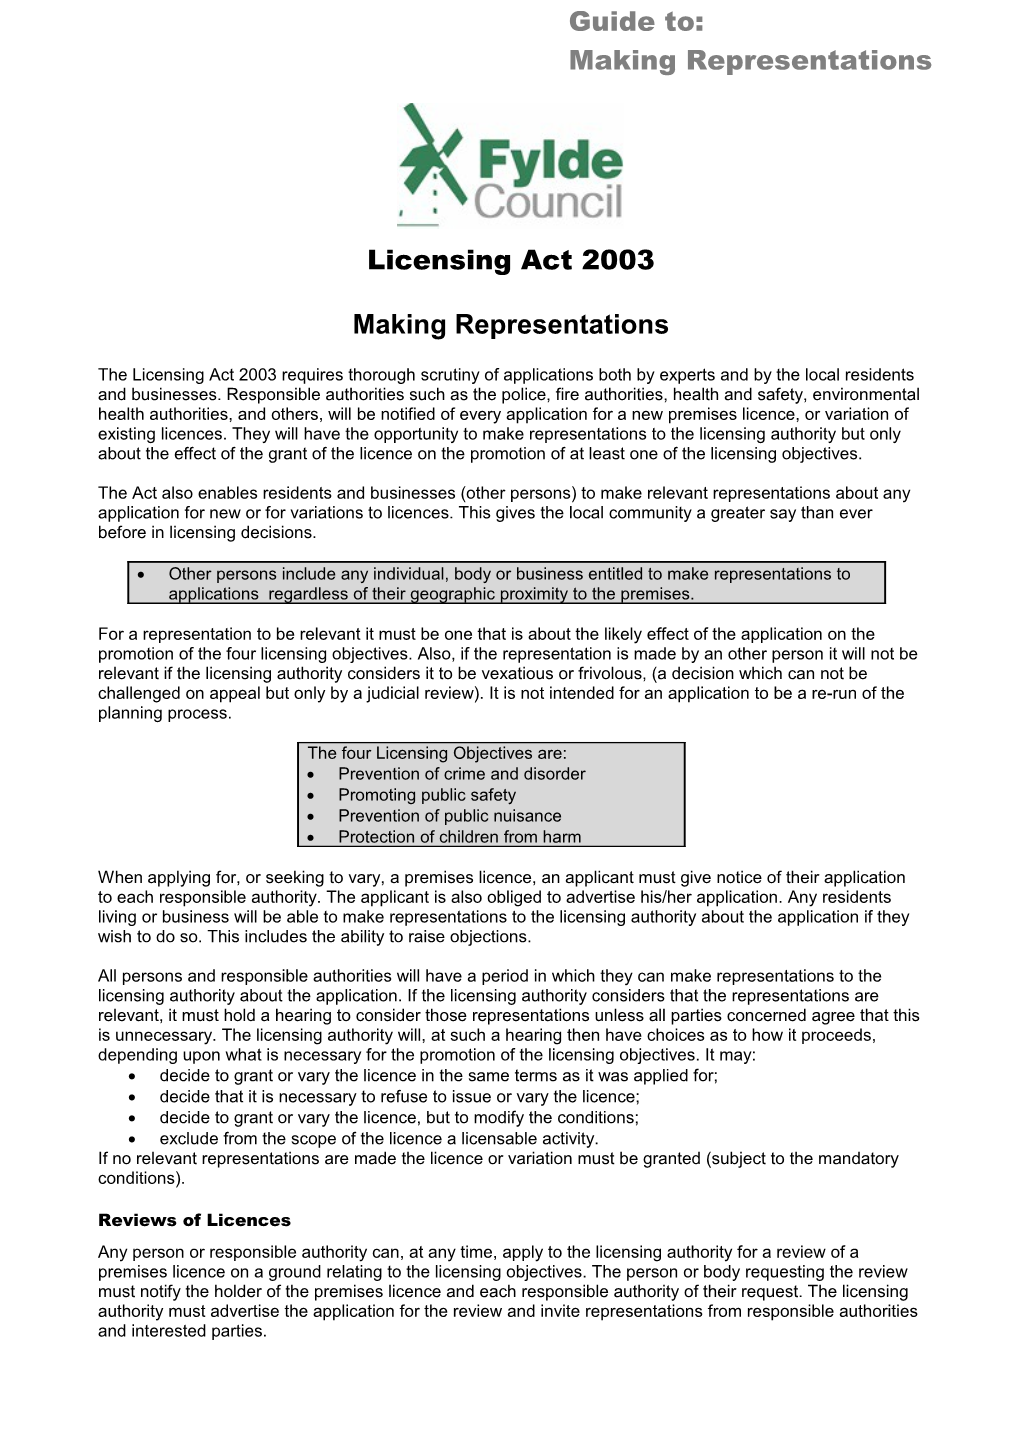 Licensing Act 2003 - Guidance Fact Sheet